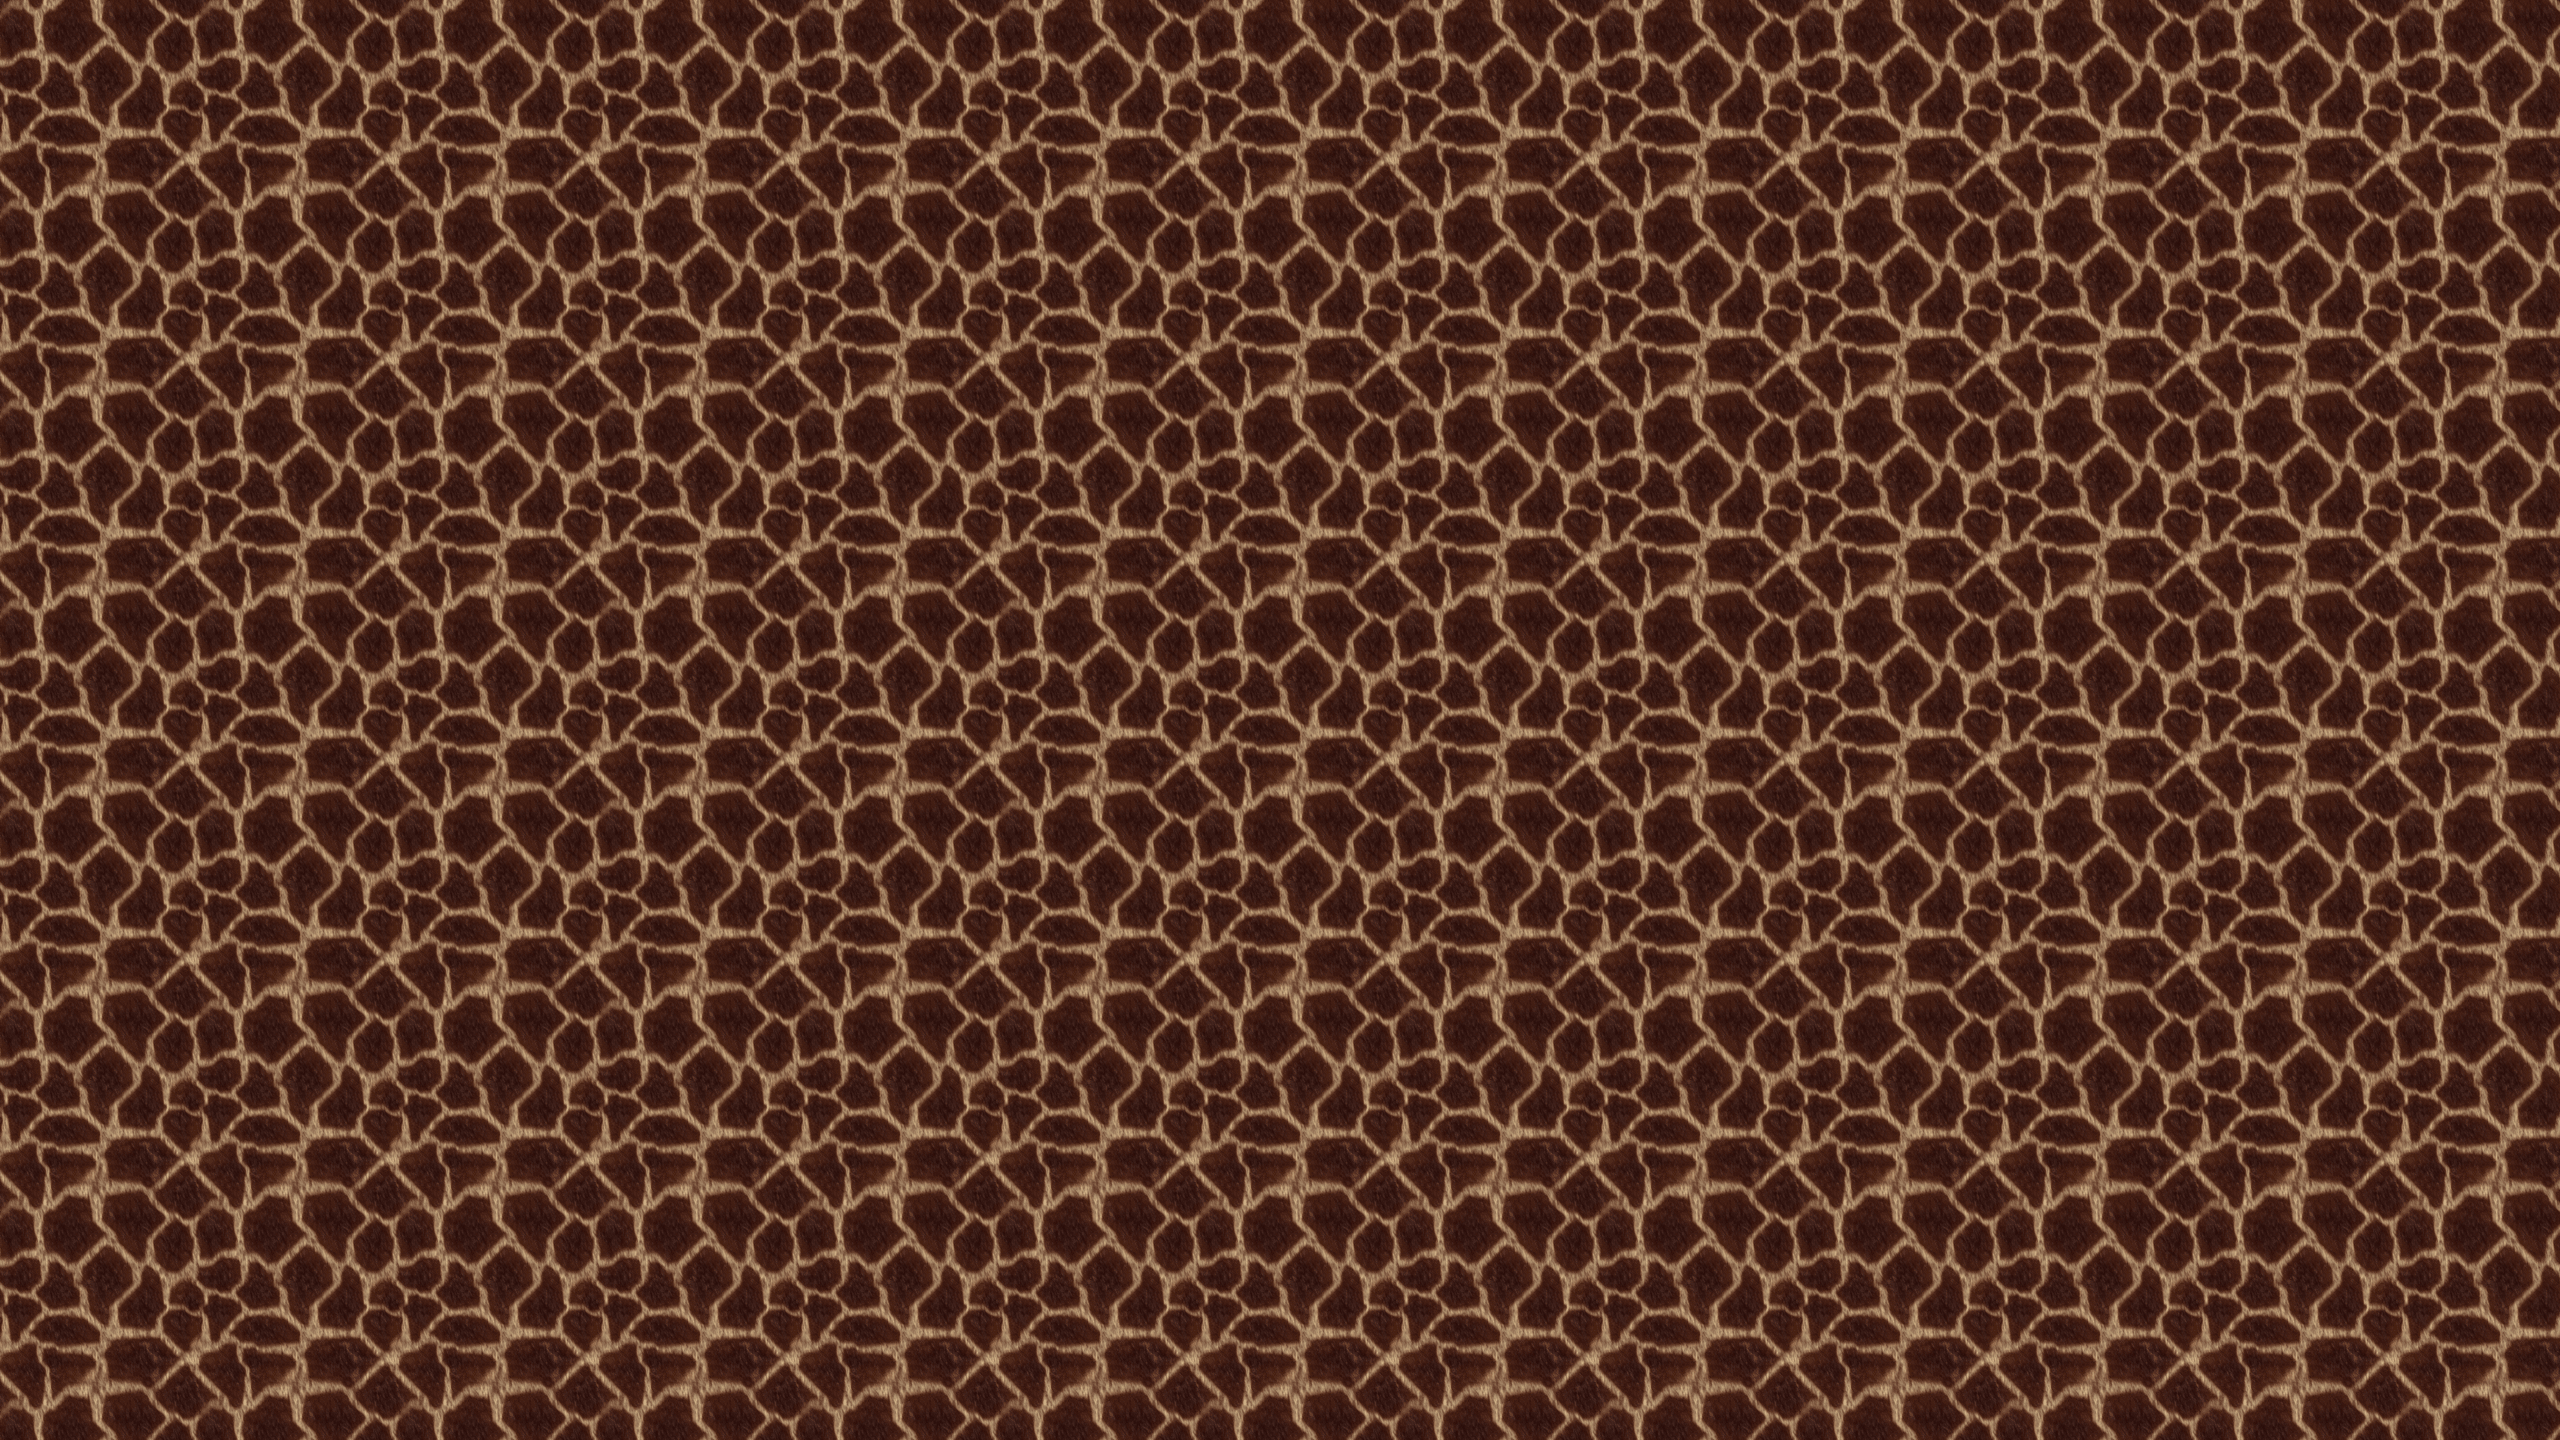 Image Giraffe Print Desktop Pc Android iPhone And iPad Wallpaper